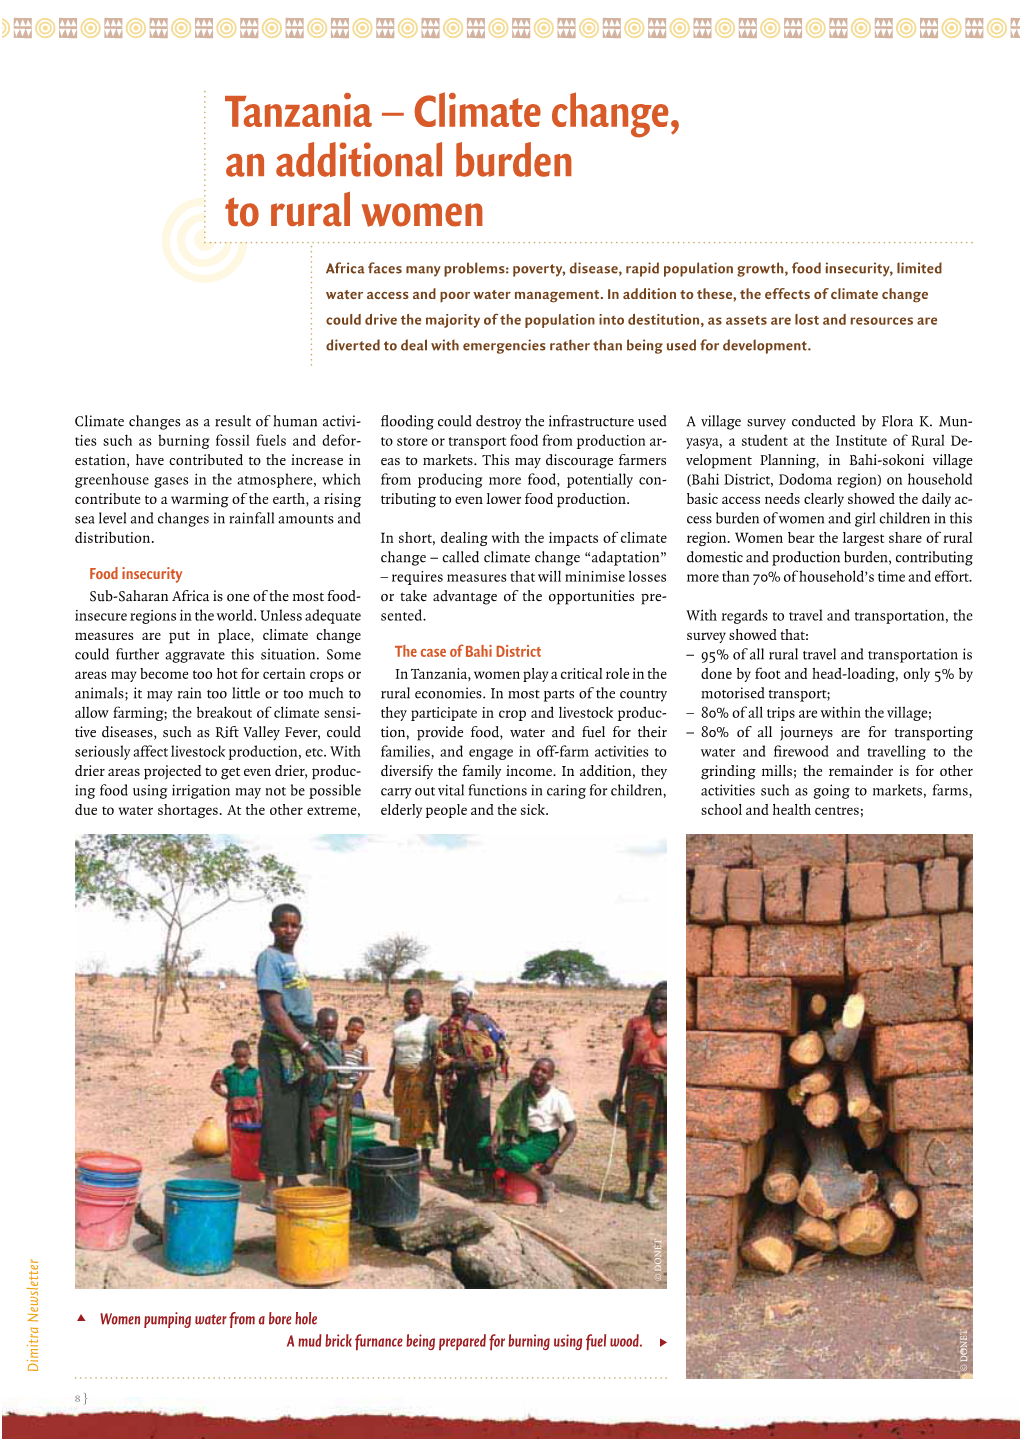 Tanzania –Climate Change, an Additional Burden to Rural Women